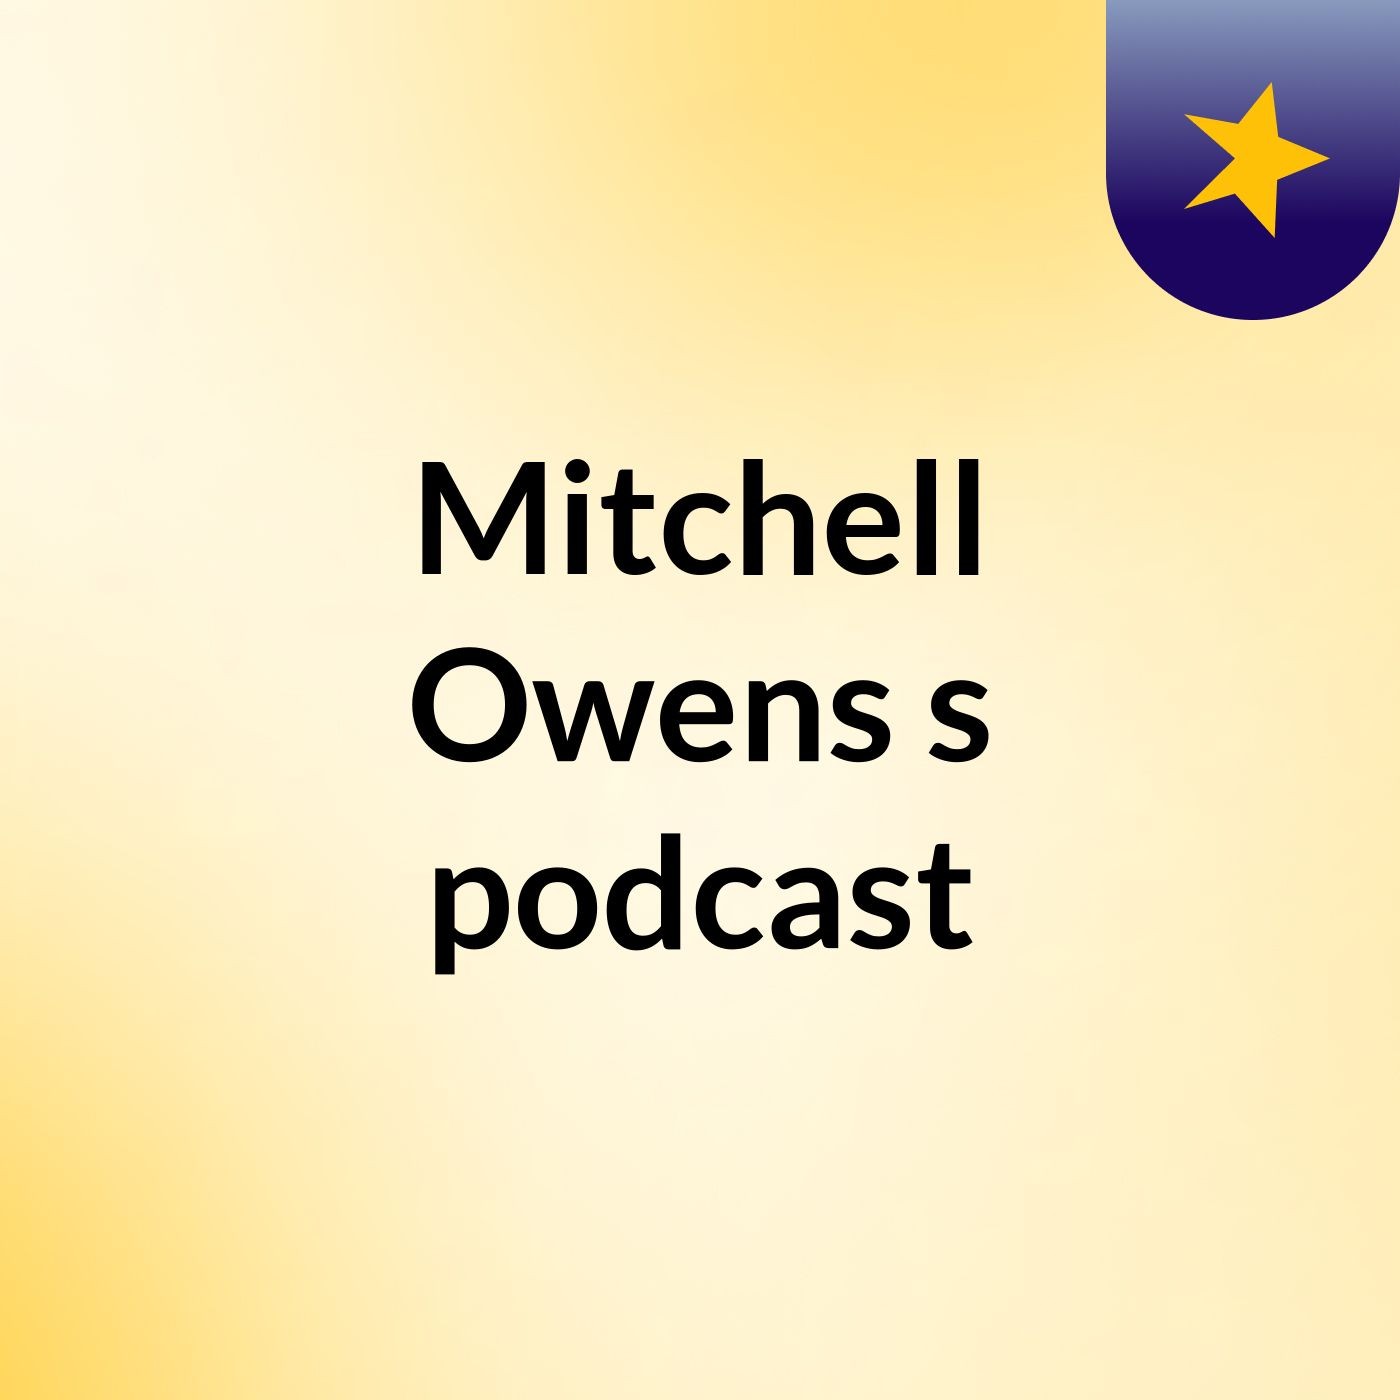 Mitchell Owens's podcast